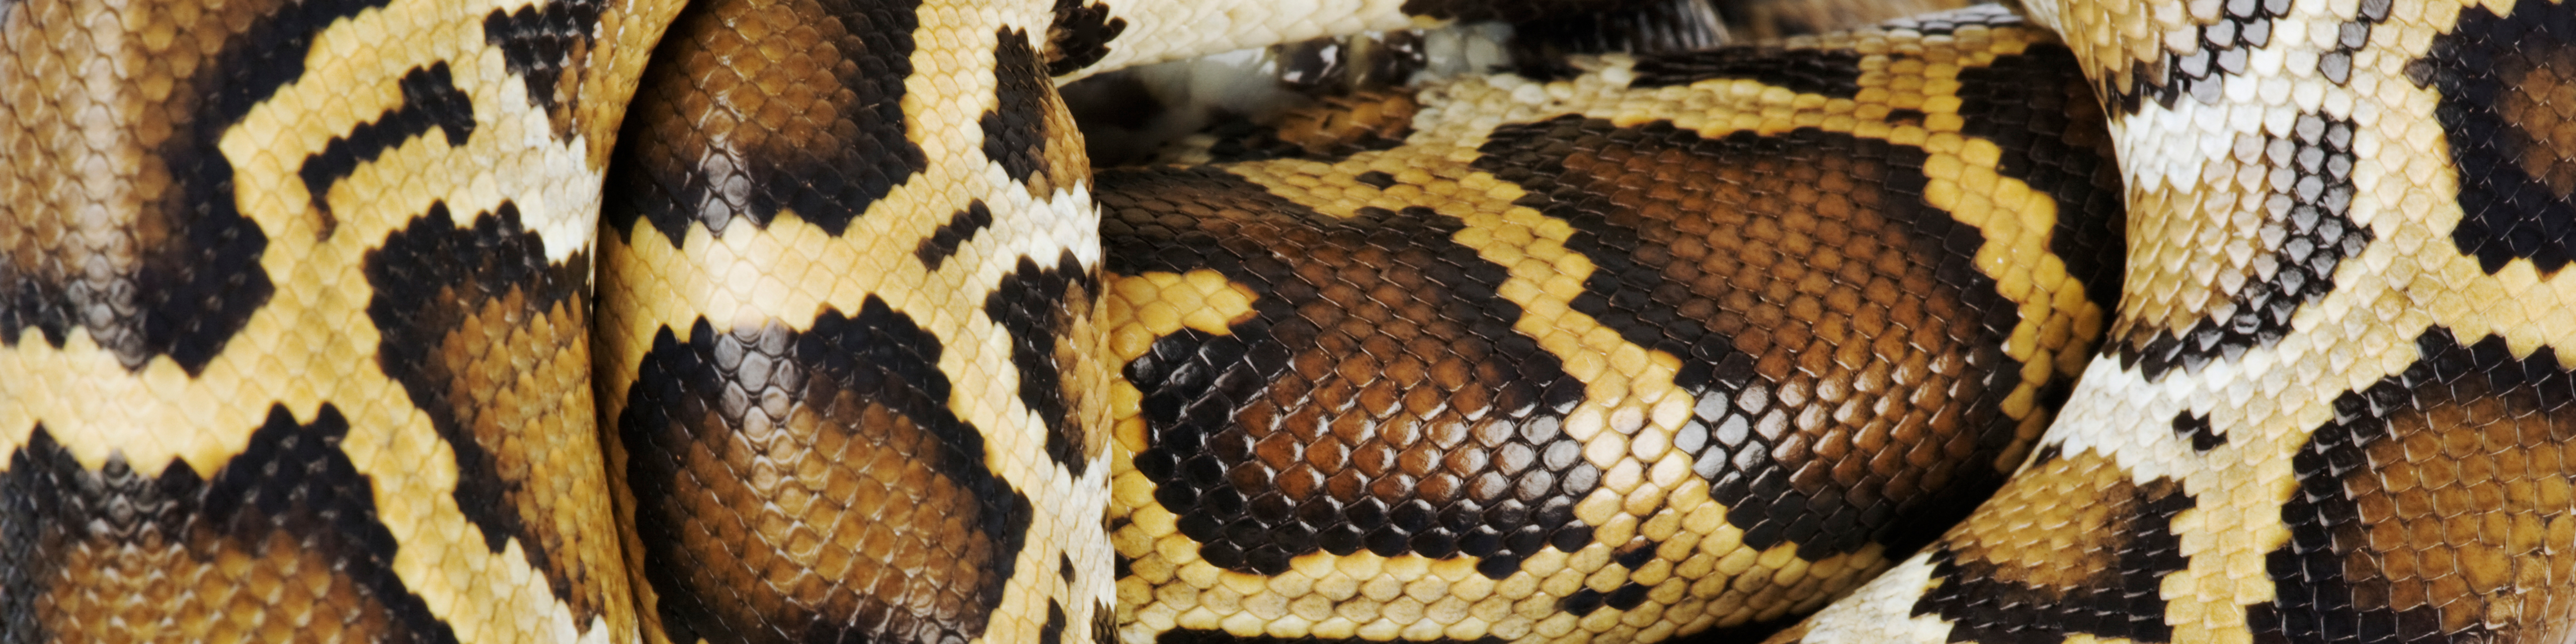 Burmese python, close up, overhead view, studio shot